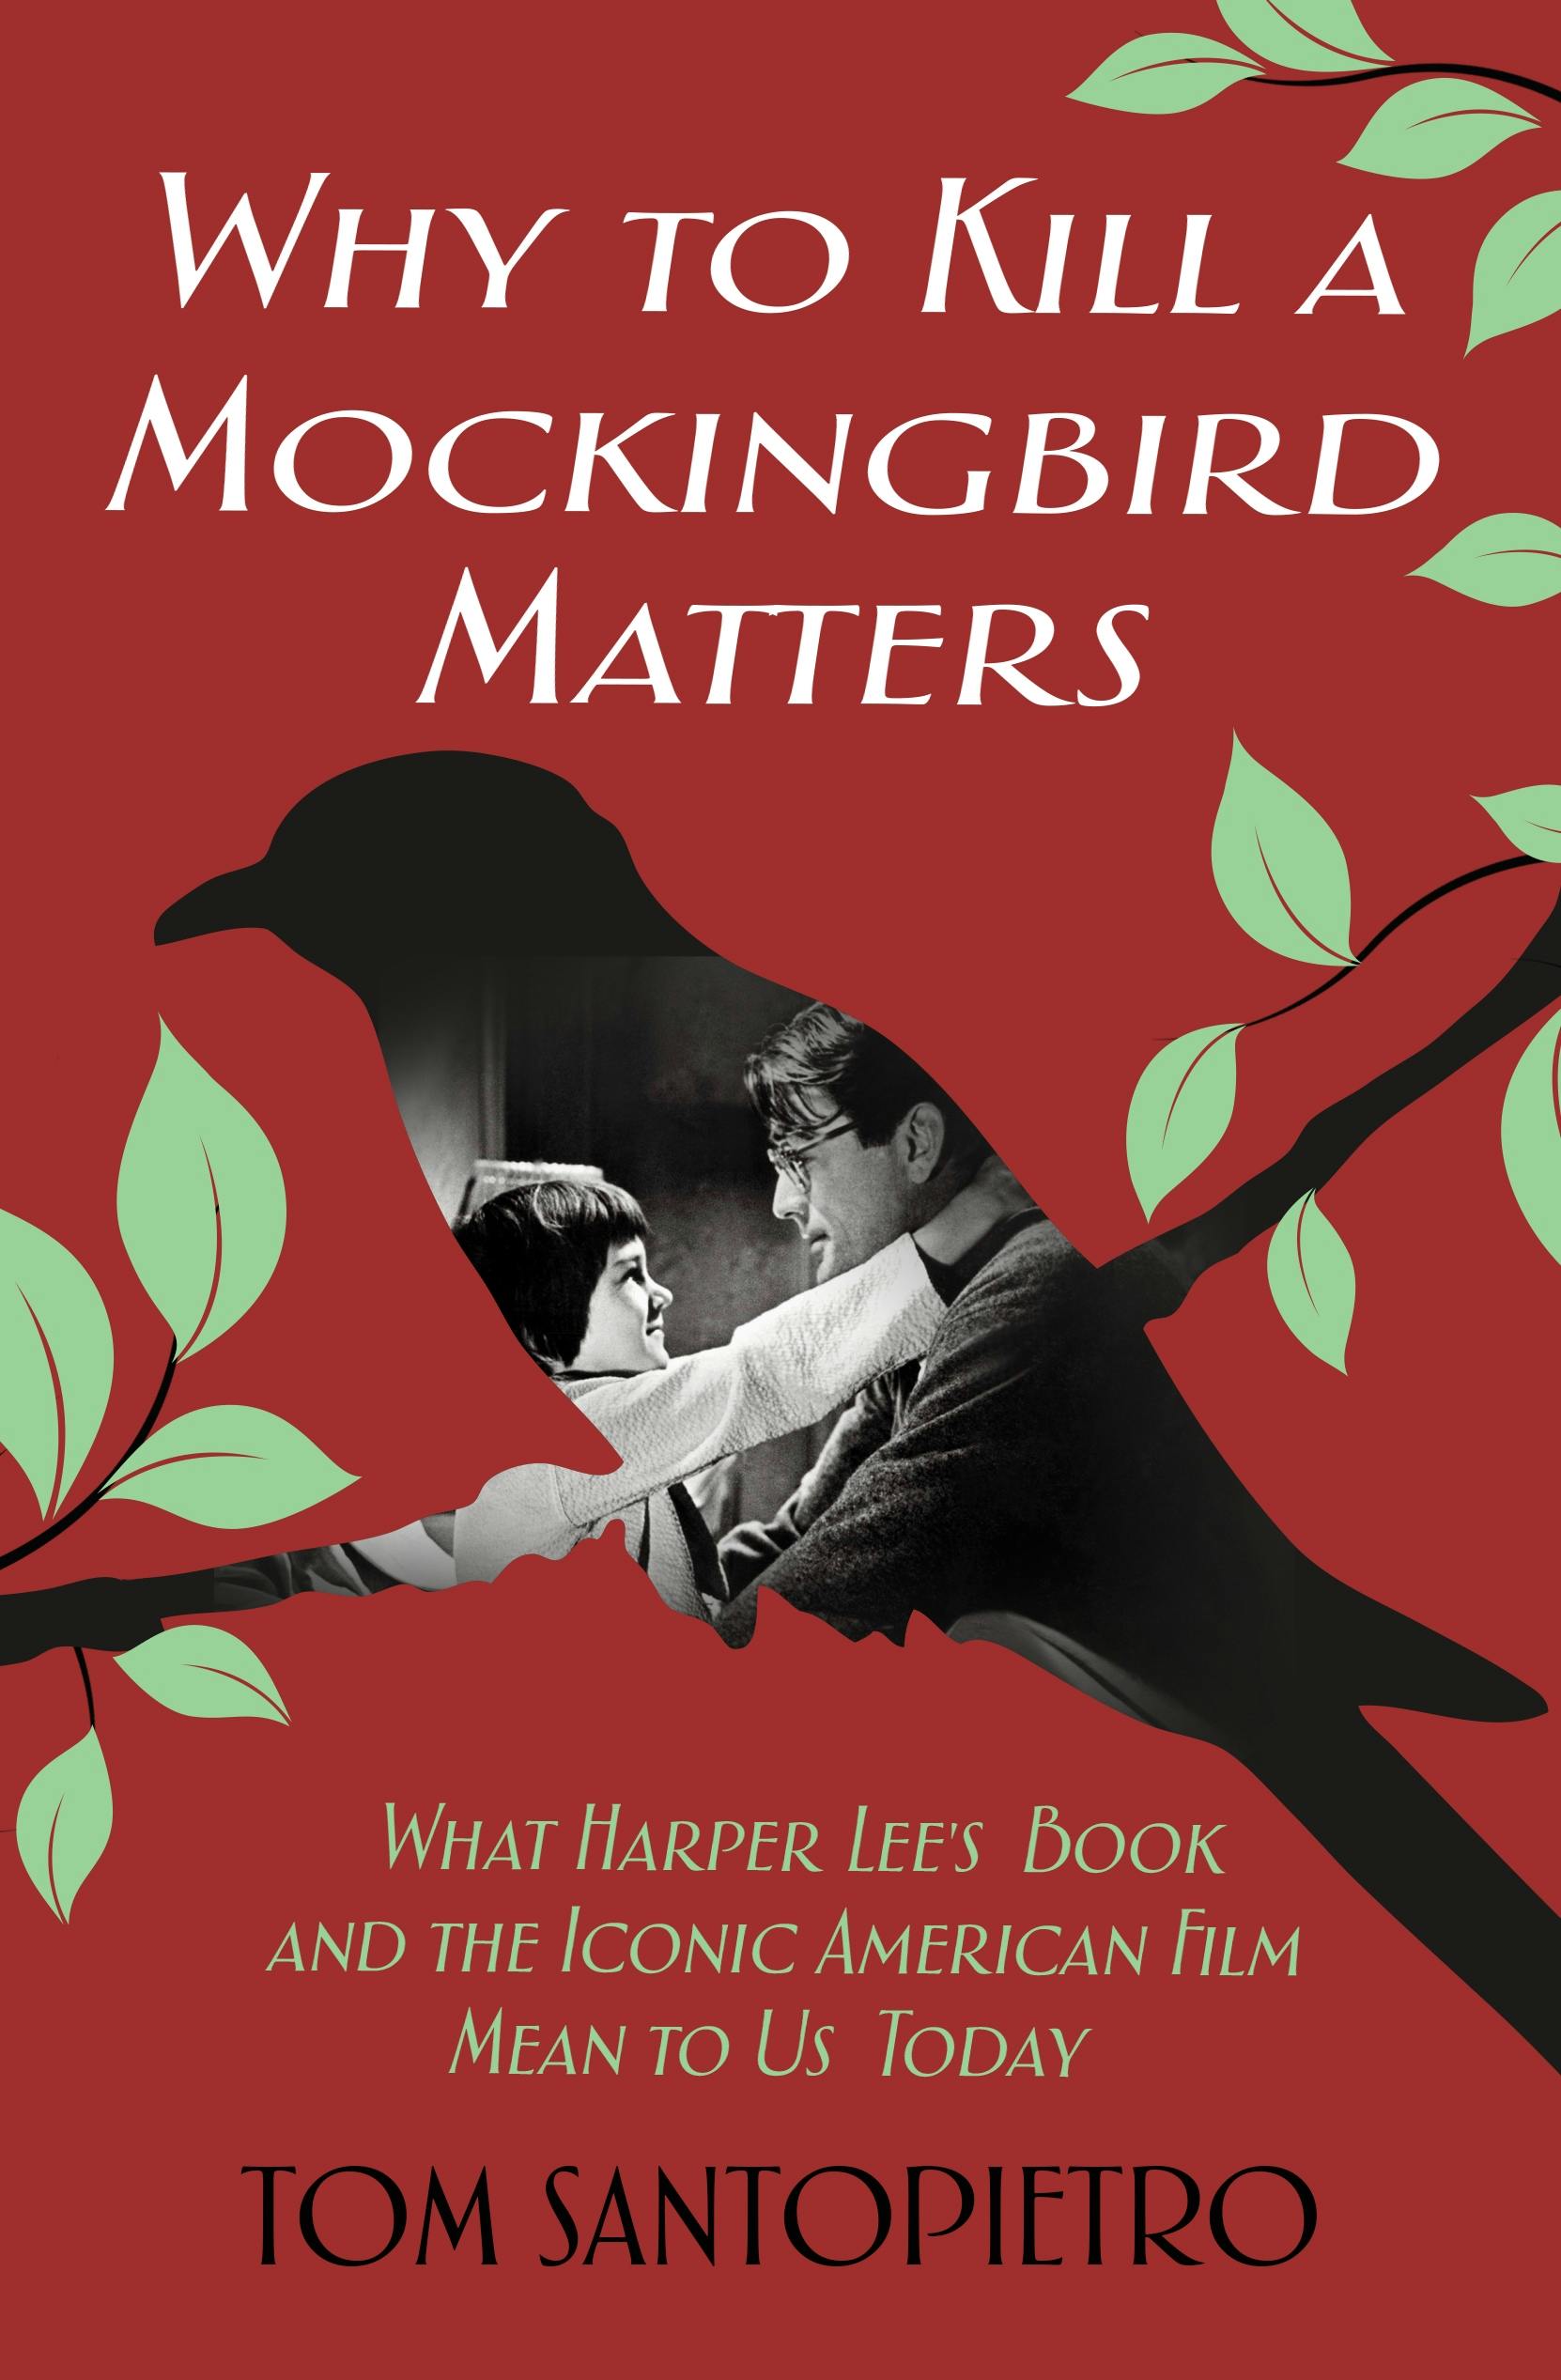 to kill a mockingbird was written by